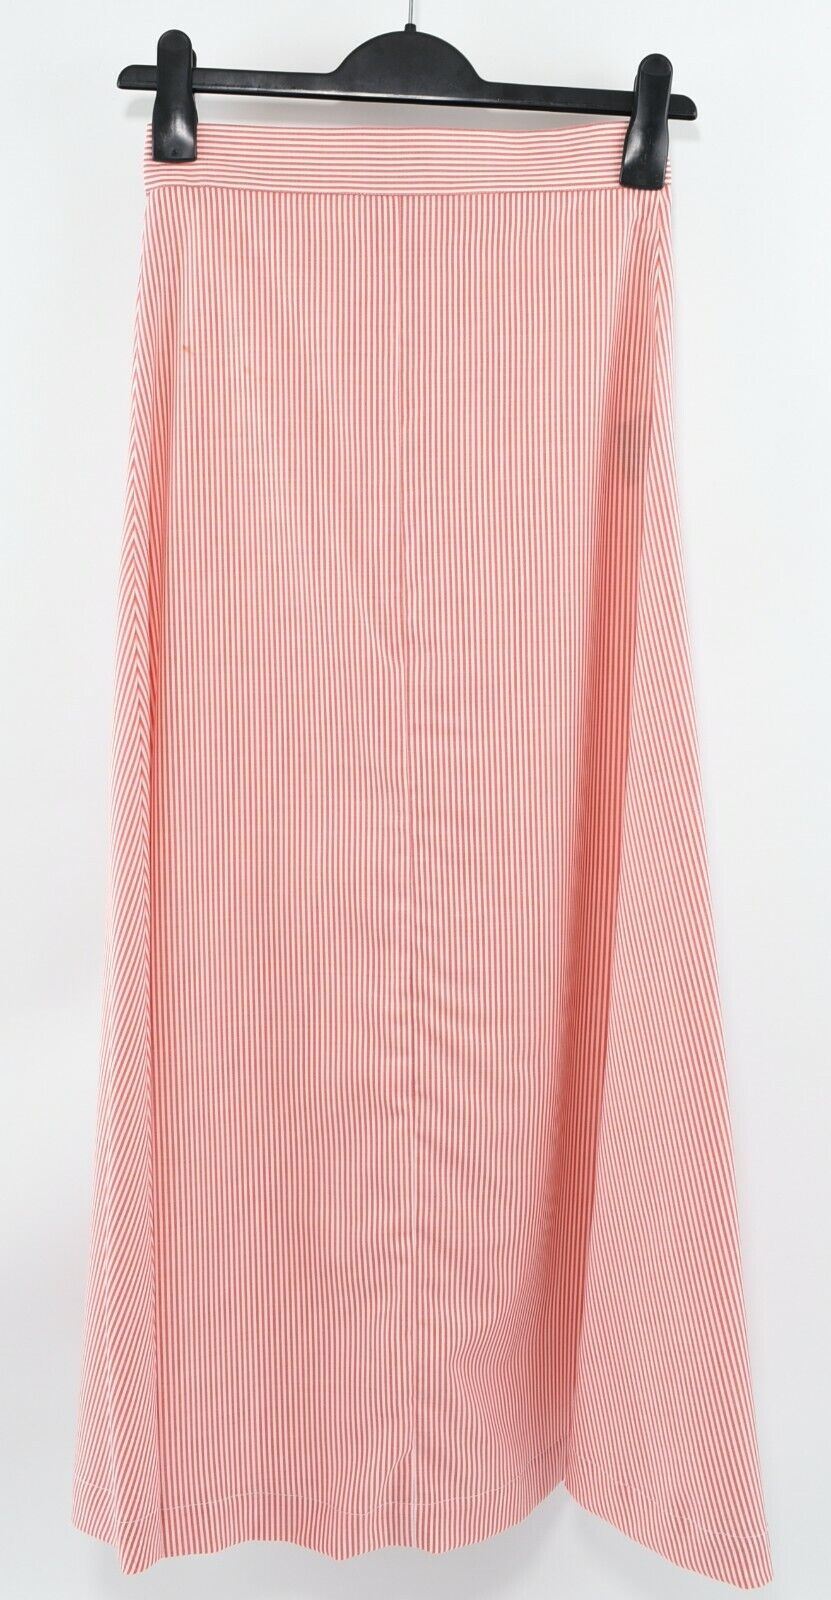 GIULIVA Women's Red Striped Lightweight Maxi Skirt, 100% Wool, size UK 6 / IT 38